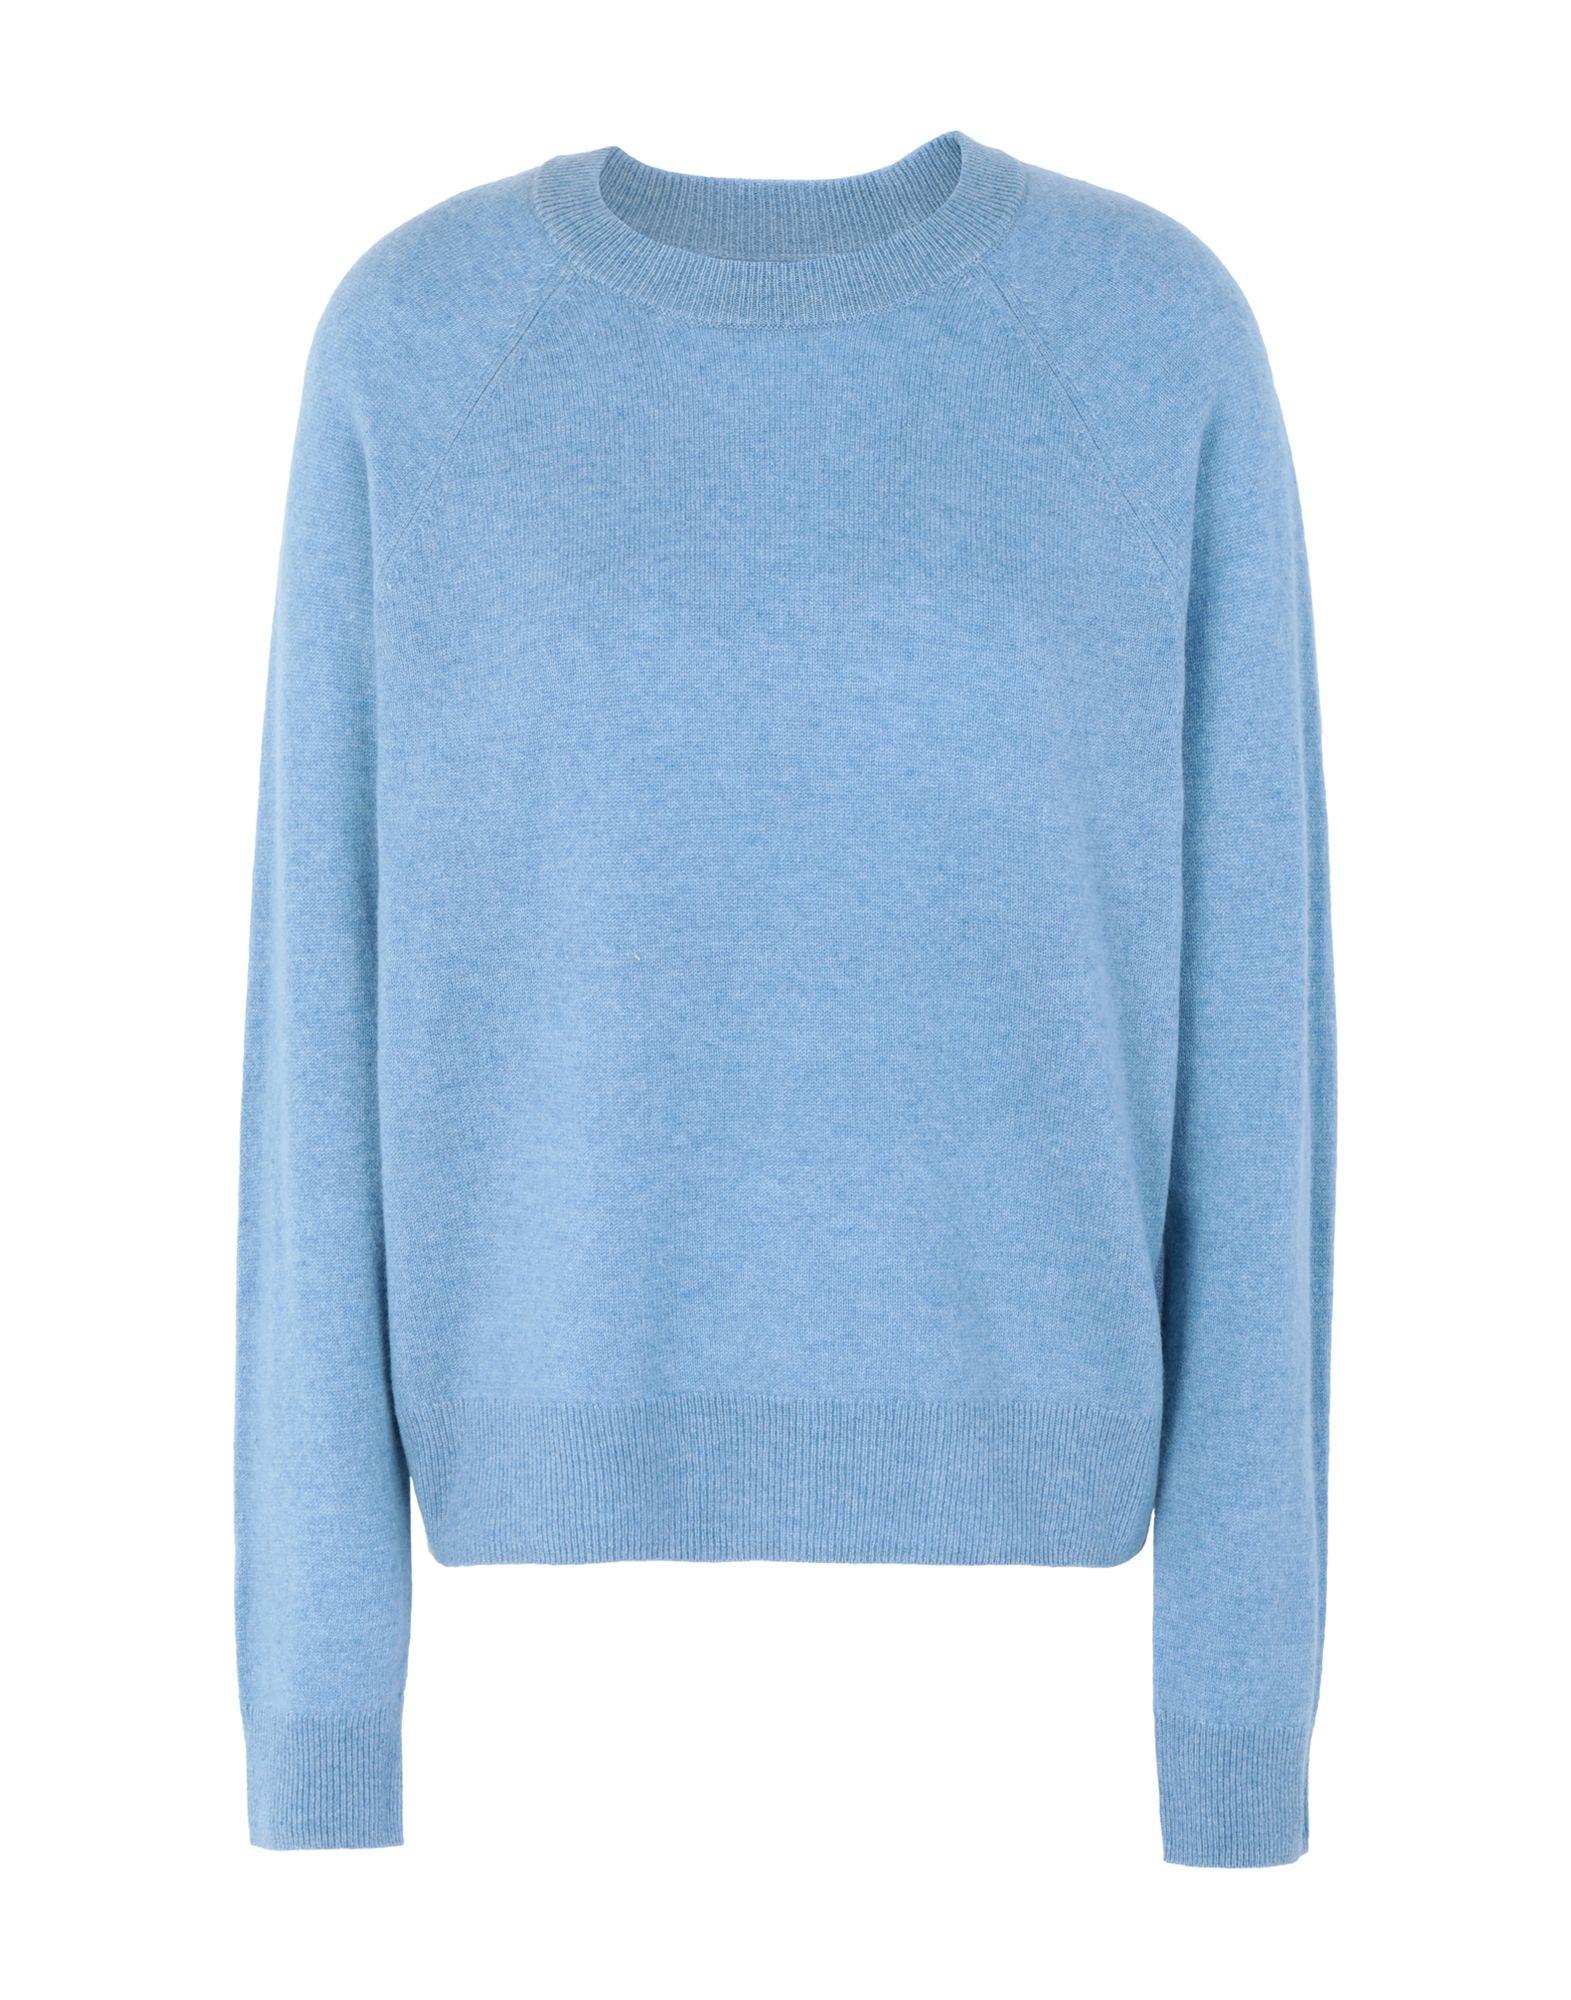 Samsøe & Samsøe Cashmere Sweater in Sky Blue (Blue) - Lyst